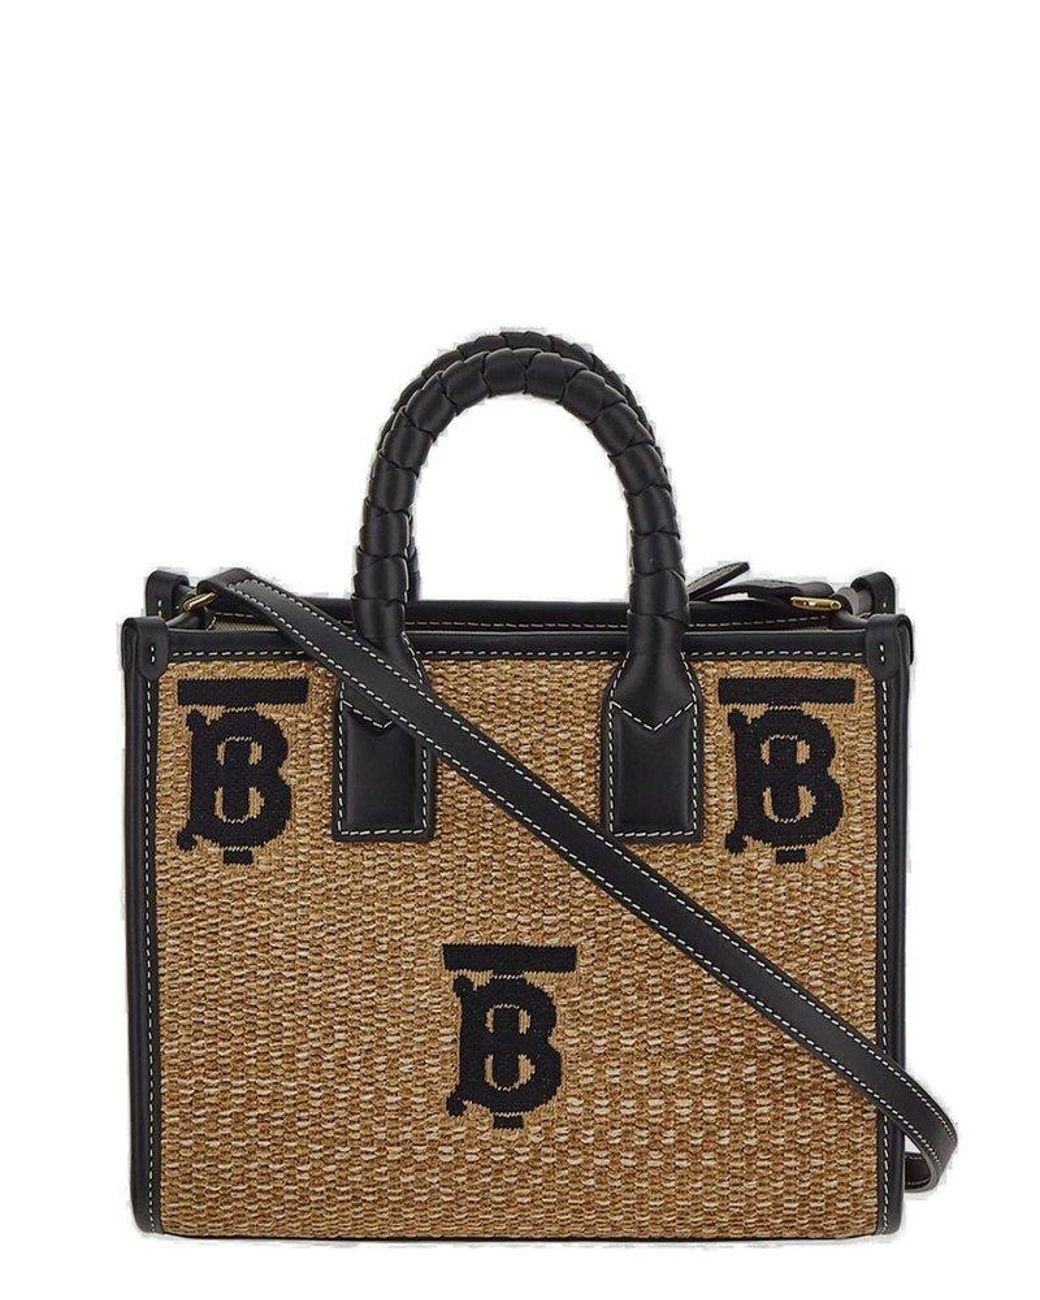 $328 Frye Freya Shopper Bag Shoulder Beige Leather Tassels NWT | eBay